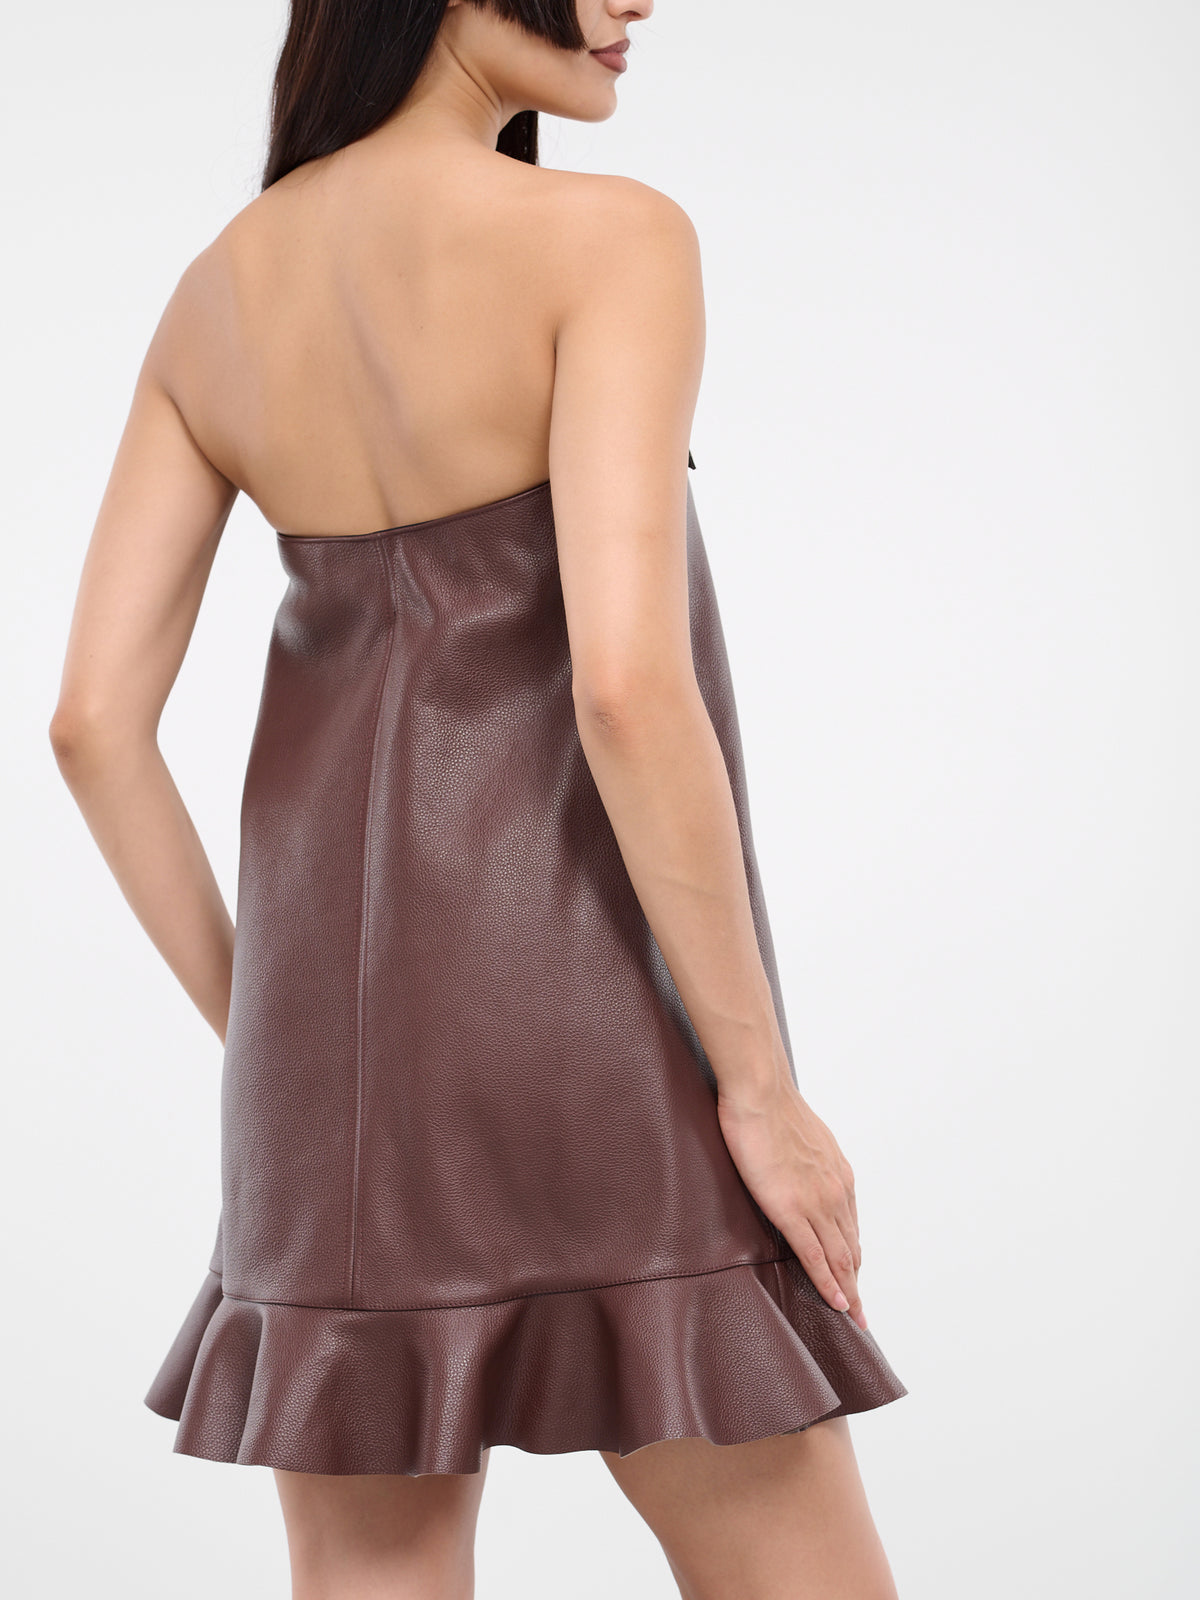 Padlock Ruffled Leather Dress (LD0011-LT0059-660-CHOCOLATE)